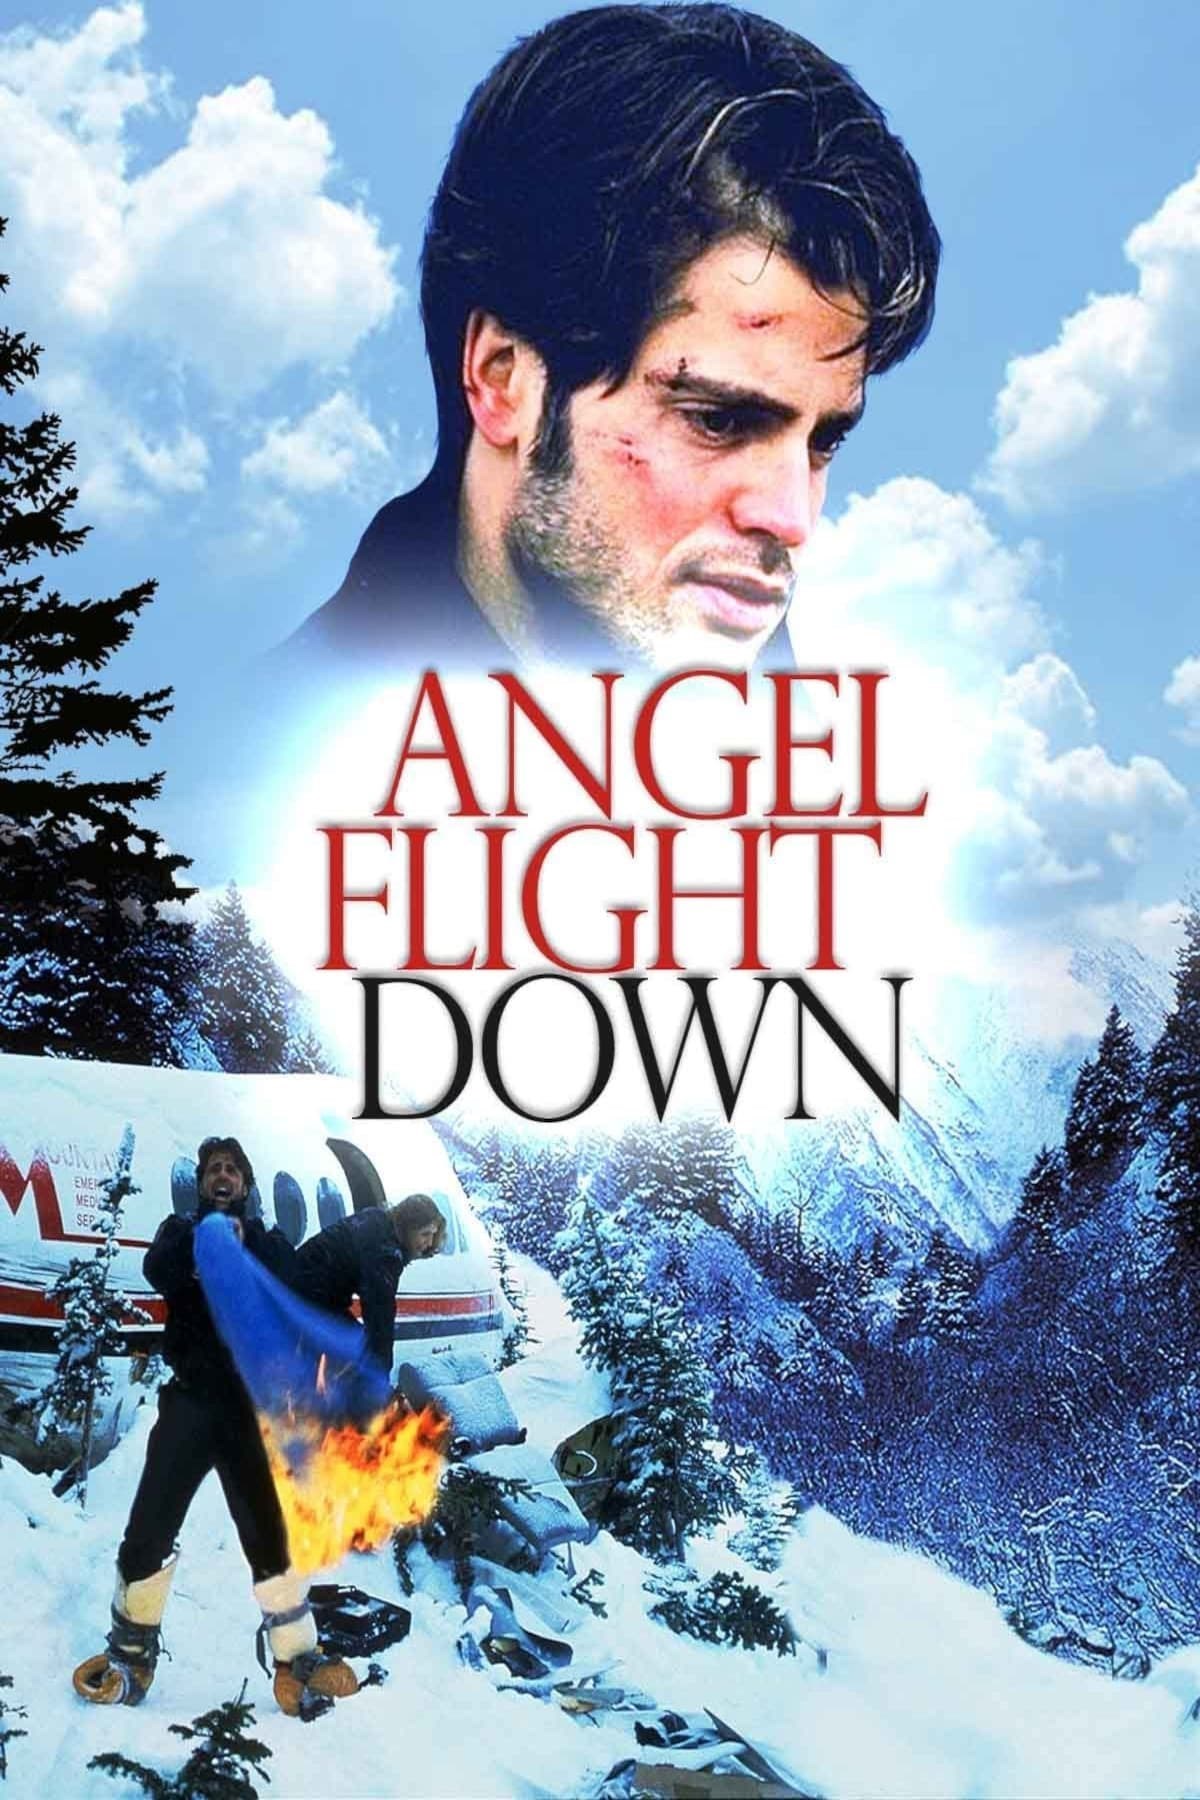 Angel flight down true story